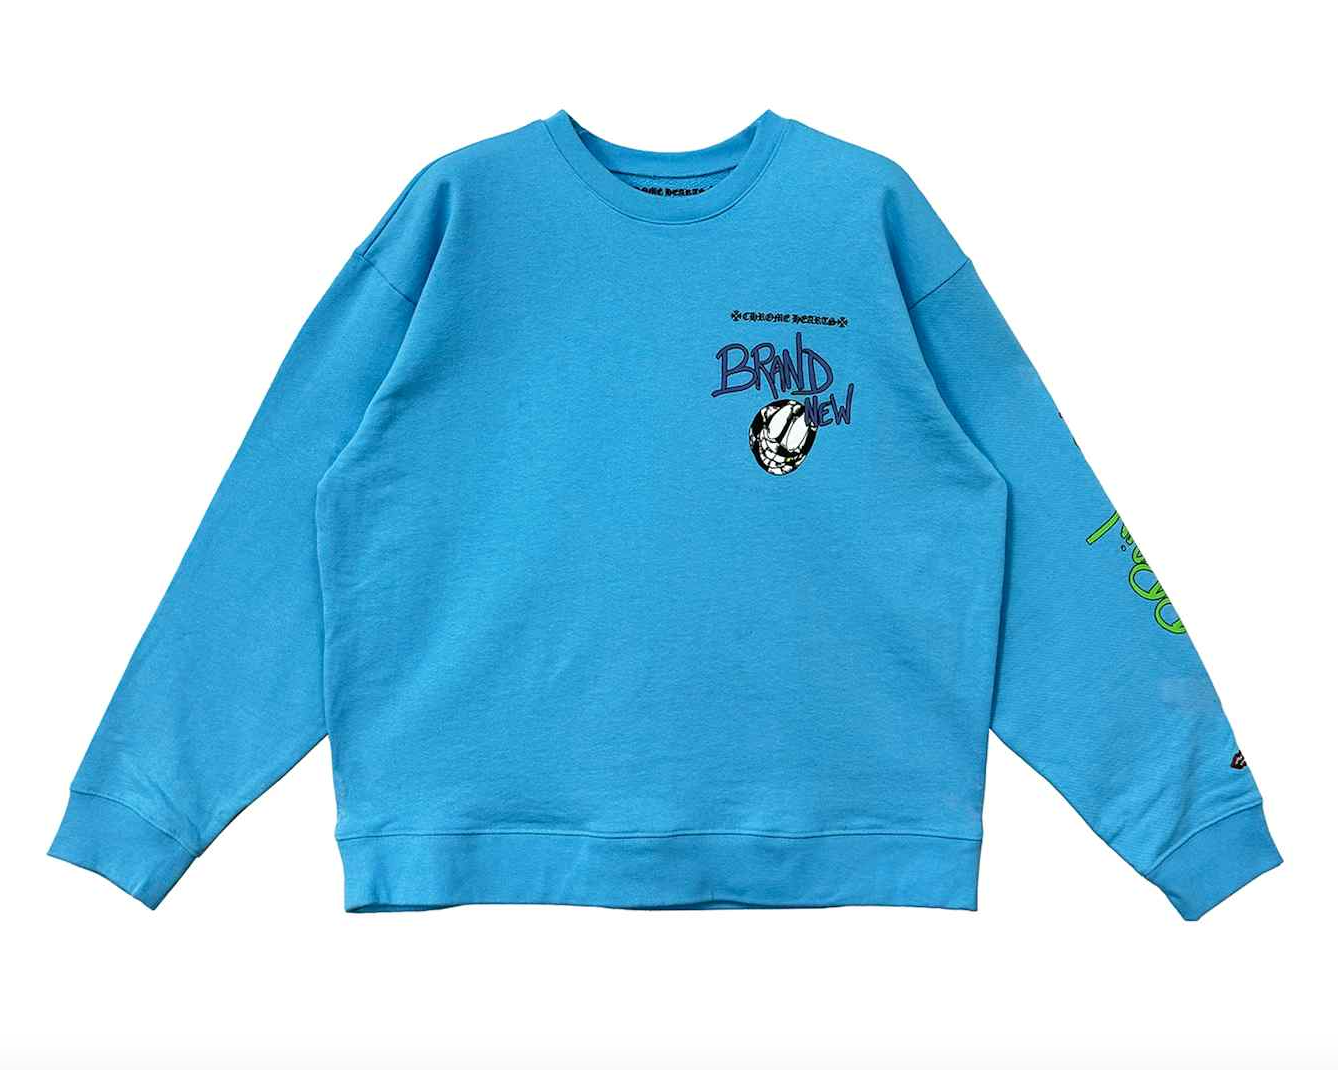 Matty Boy Brain New Crewneck Sweatshirt